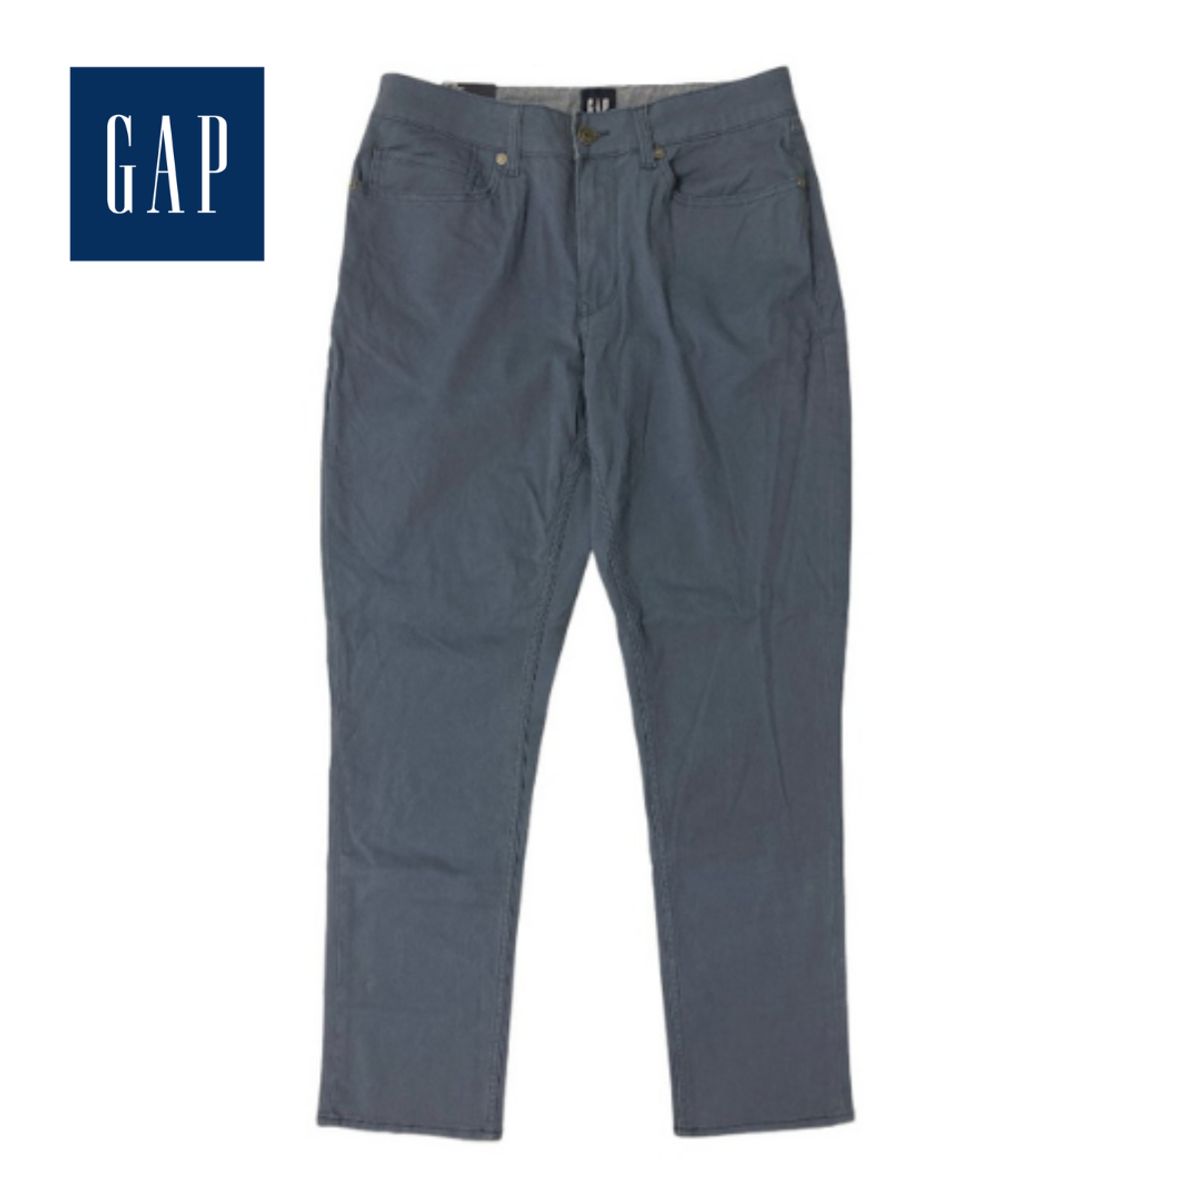 GAP Men's Twill Slim Fit Pant - 40 x 32 - Vintage Indigo